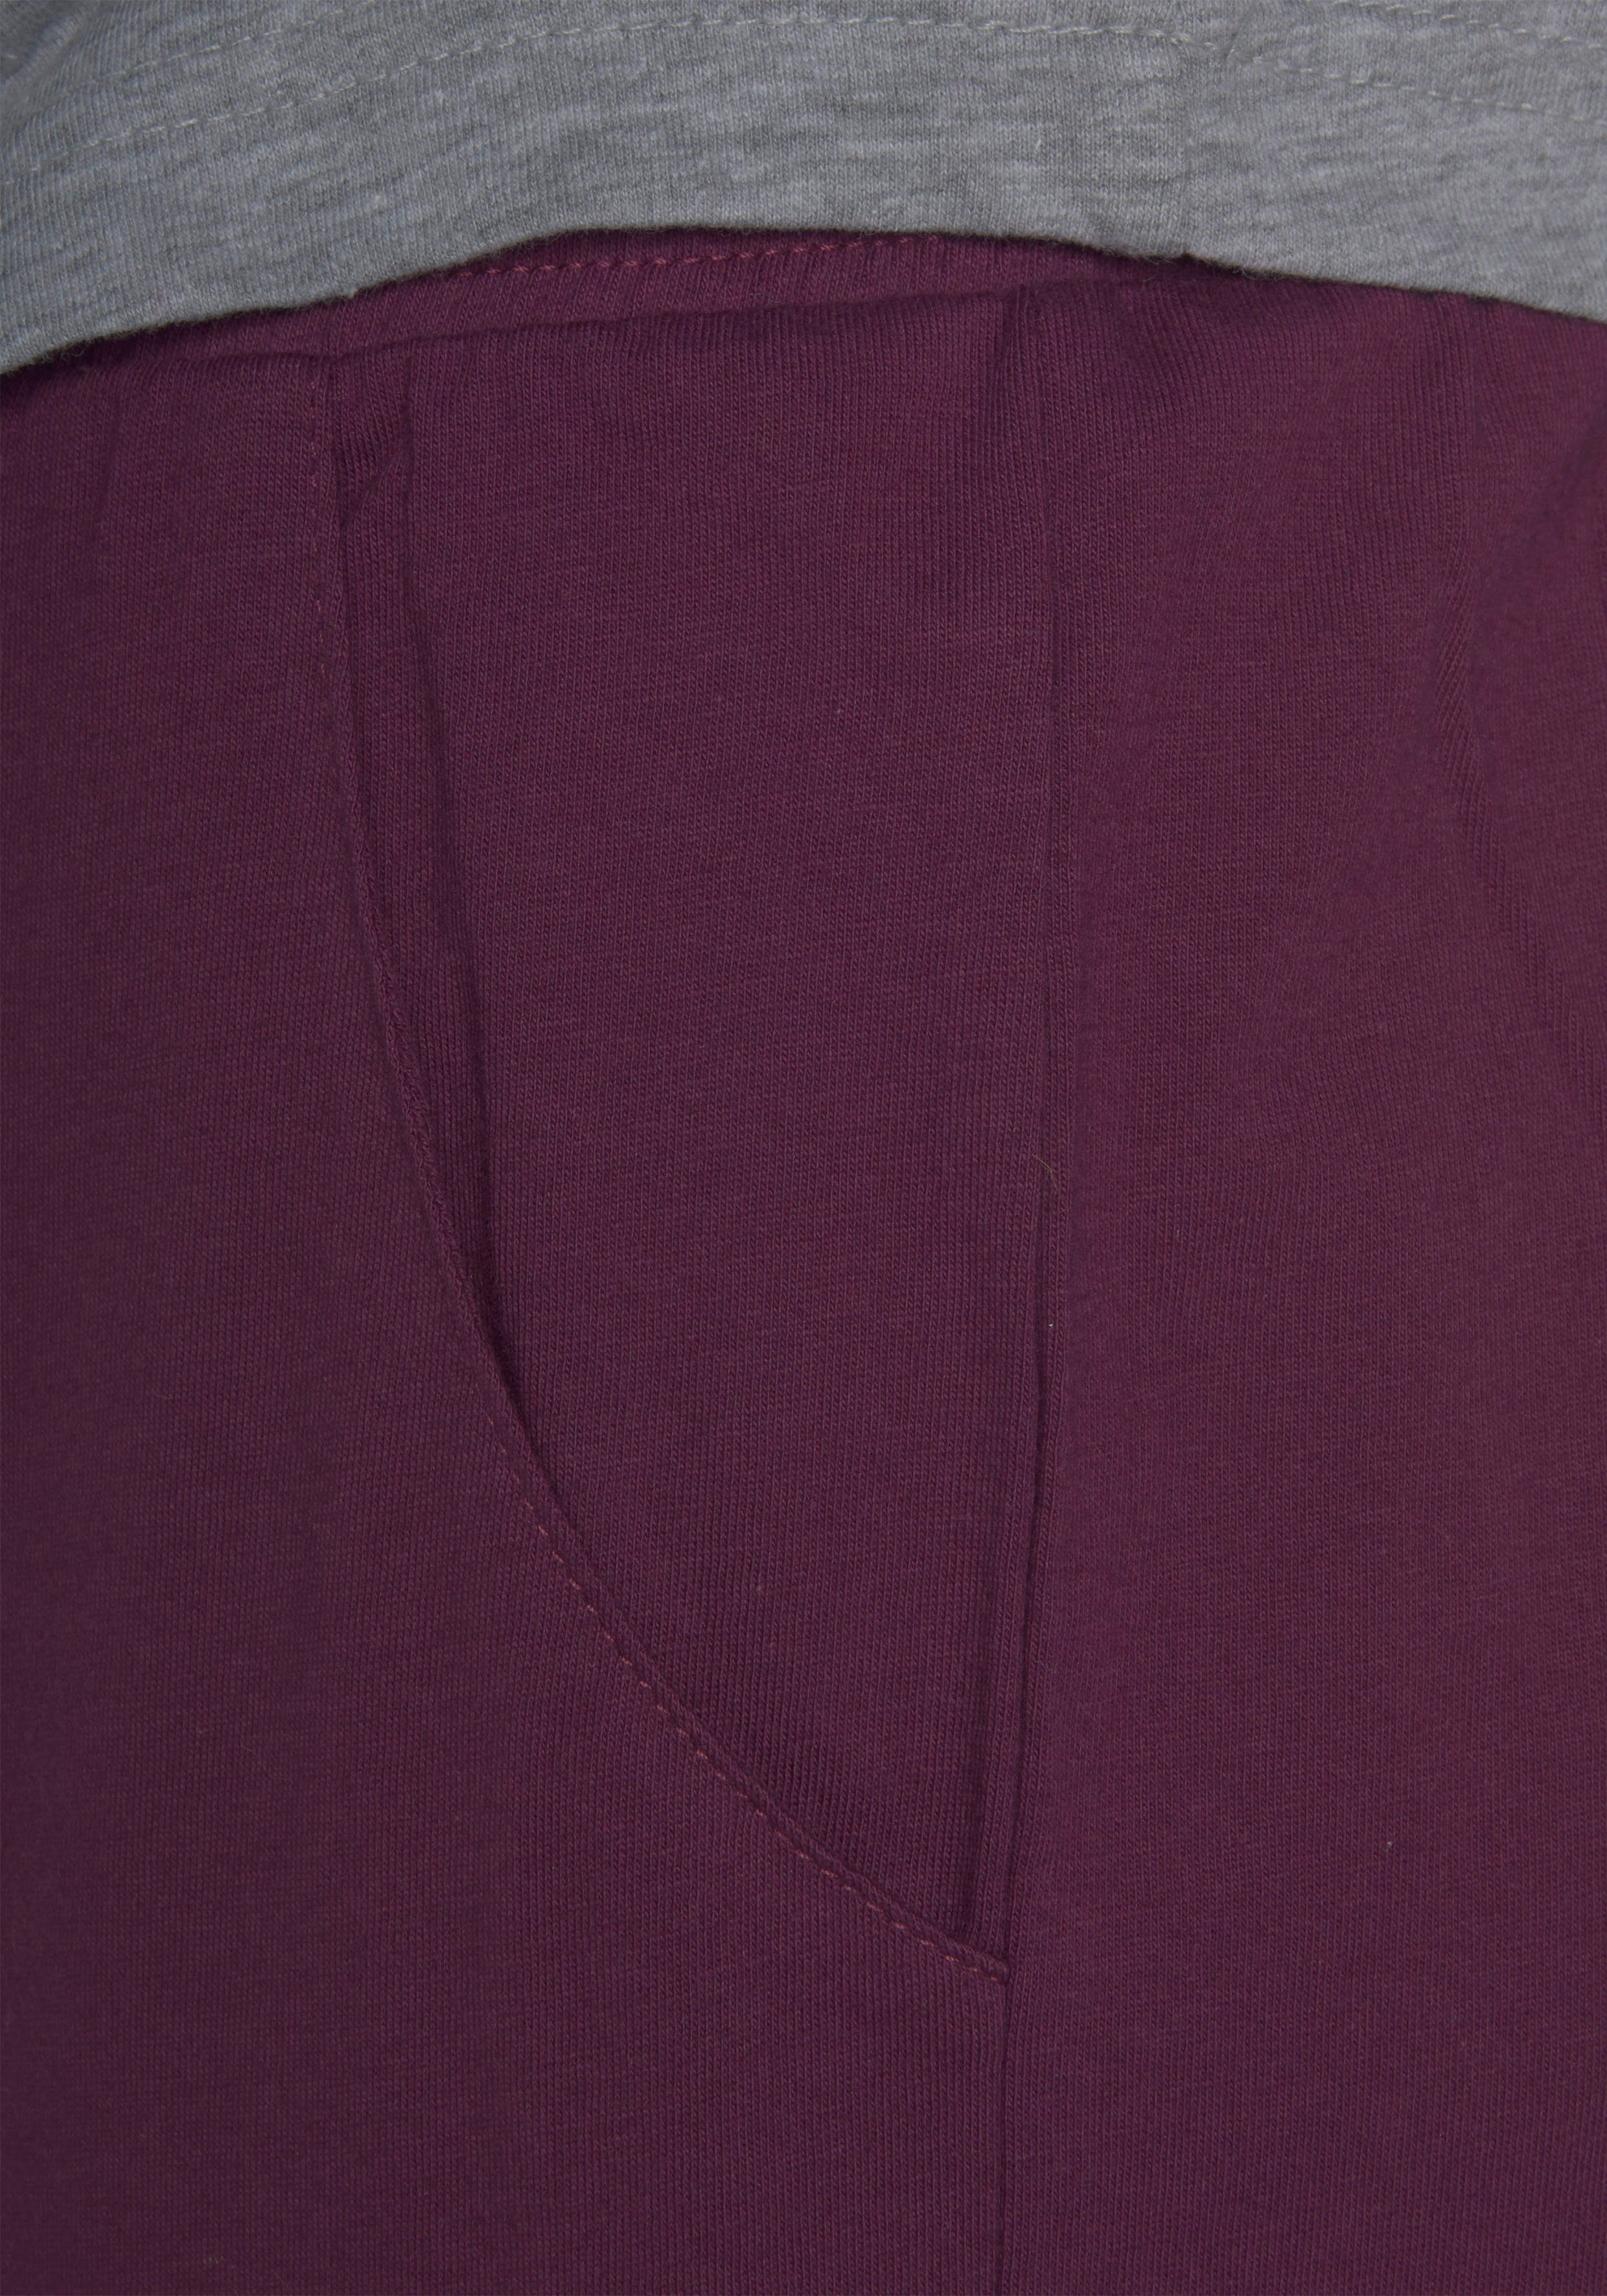 KangaROOS Pyjama kontrastfarbenen Stück) bordeaux-grau-meliert Raglanärmeln 1 tlg., mit (2